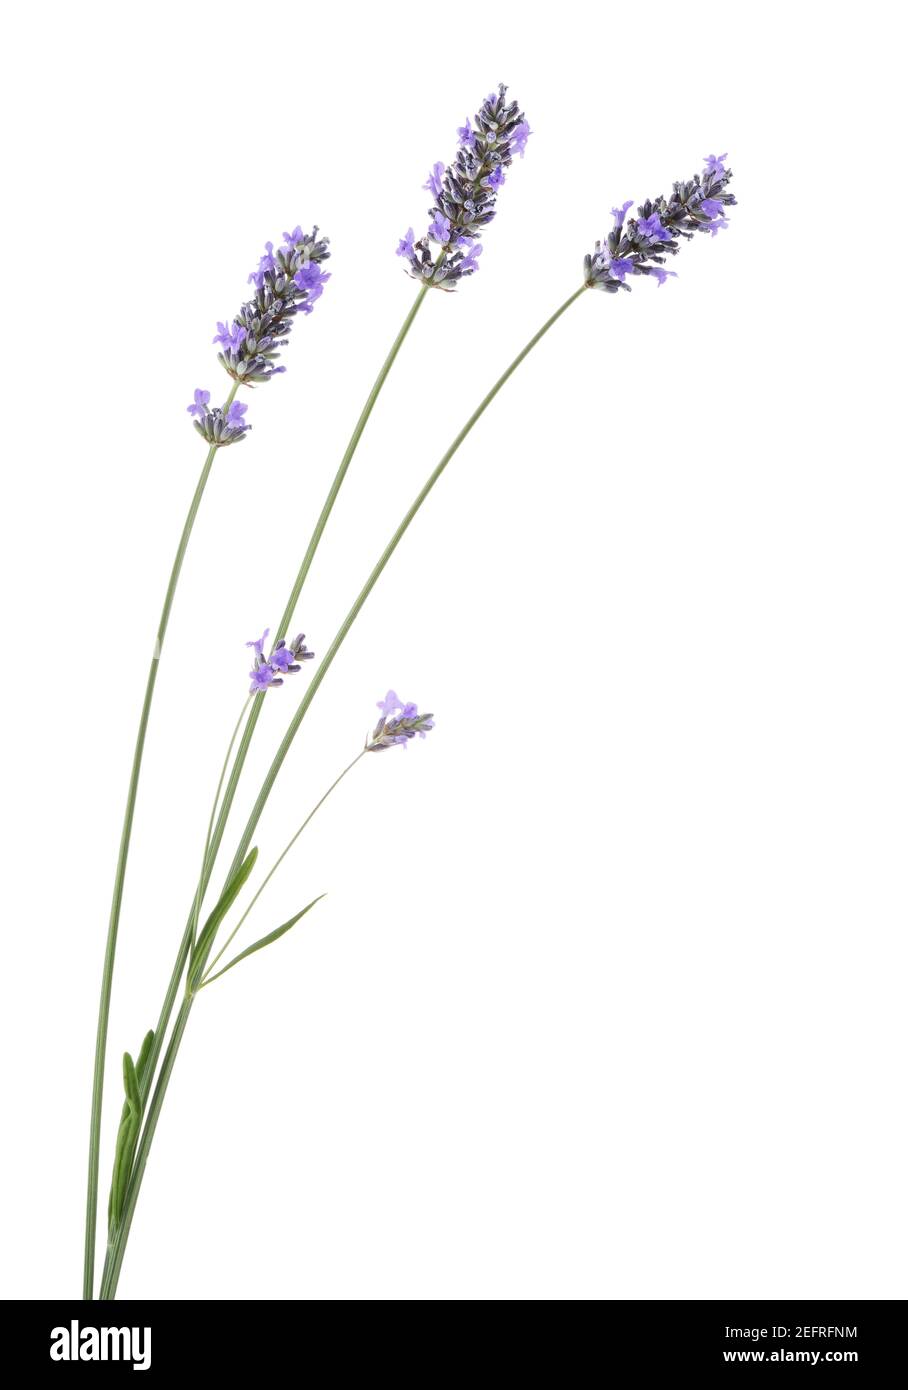 Closeup of purple lavender flowers on stalks, Lavandula angustifolia, English Lavender, common lavender, Grosso. Side view isolated on white studio ba Stock Photo